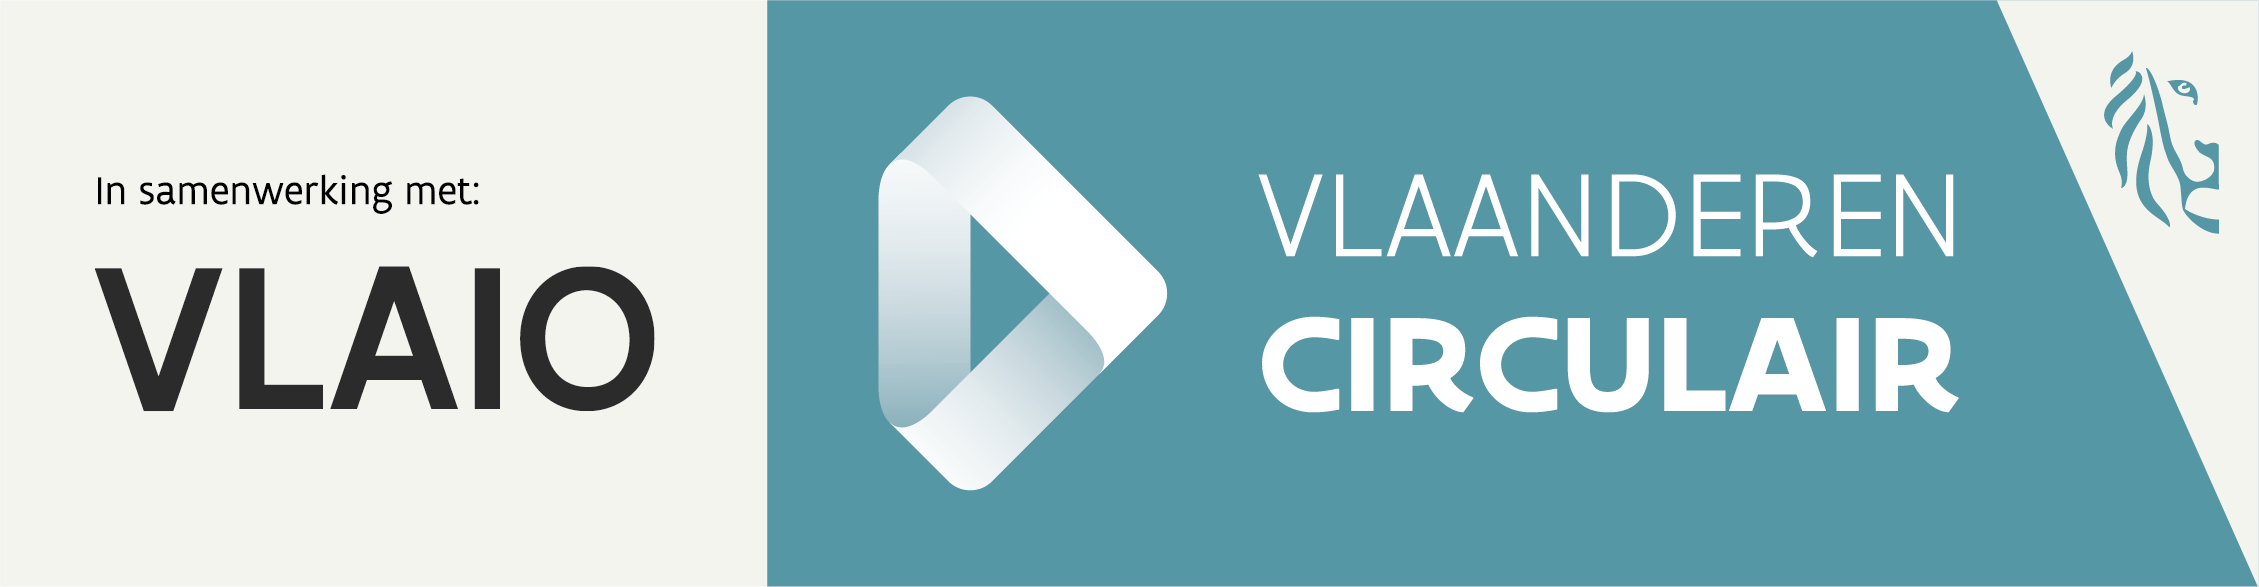 Sponsorlogo VLAIO - Vlaanderen Circulair